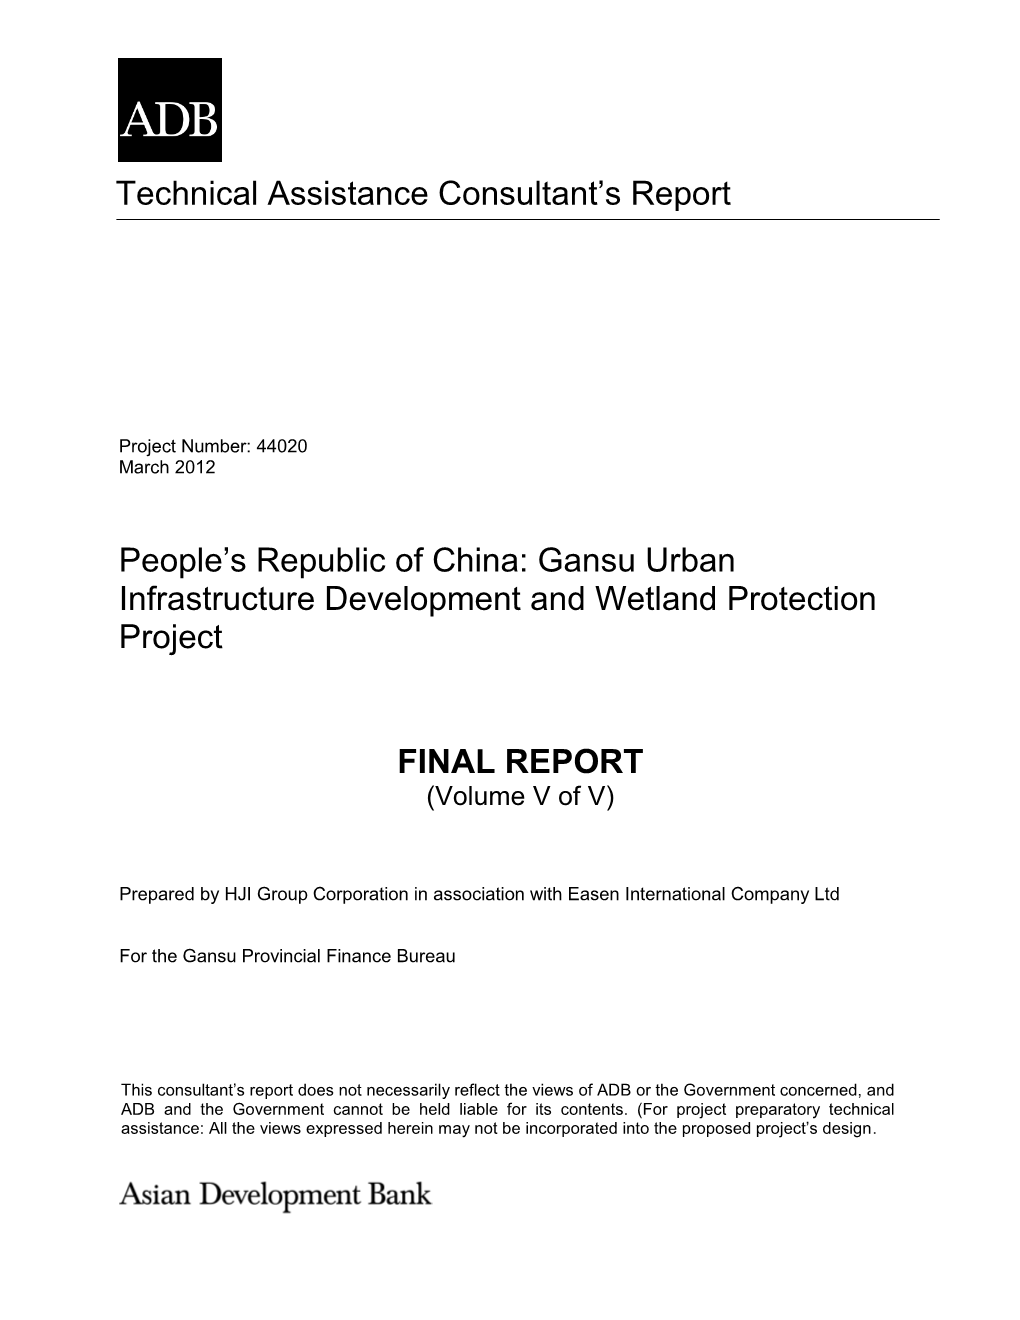 People's Republic of China: Gansu Urban Infrastructure Development